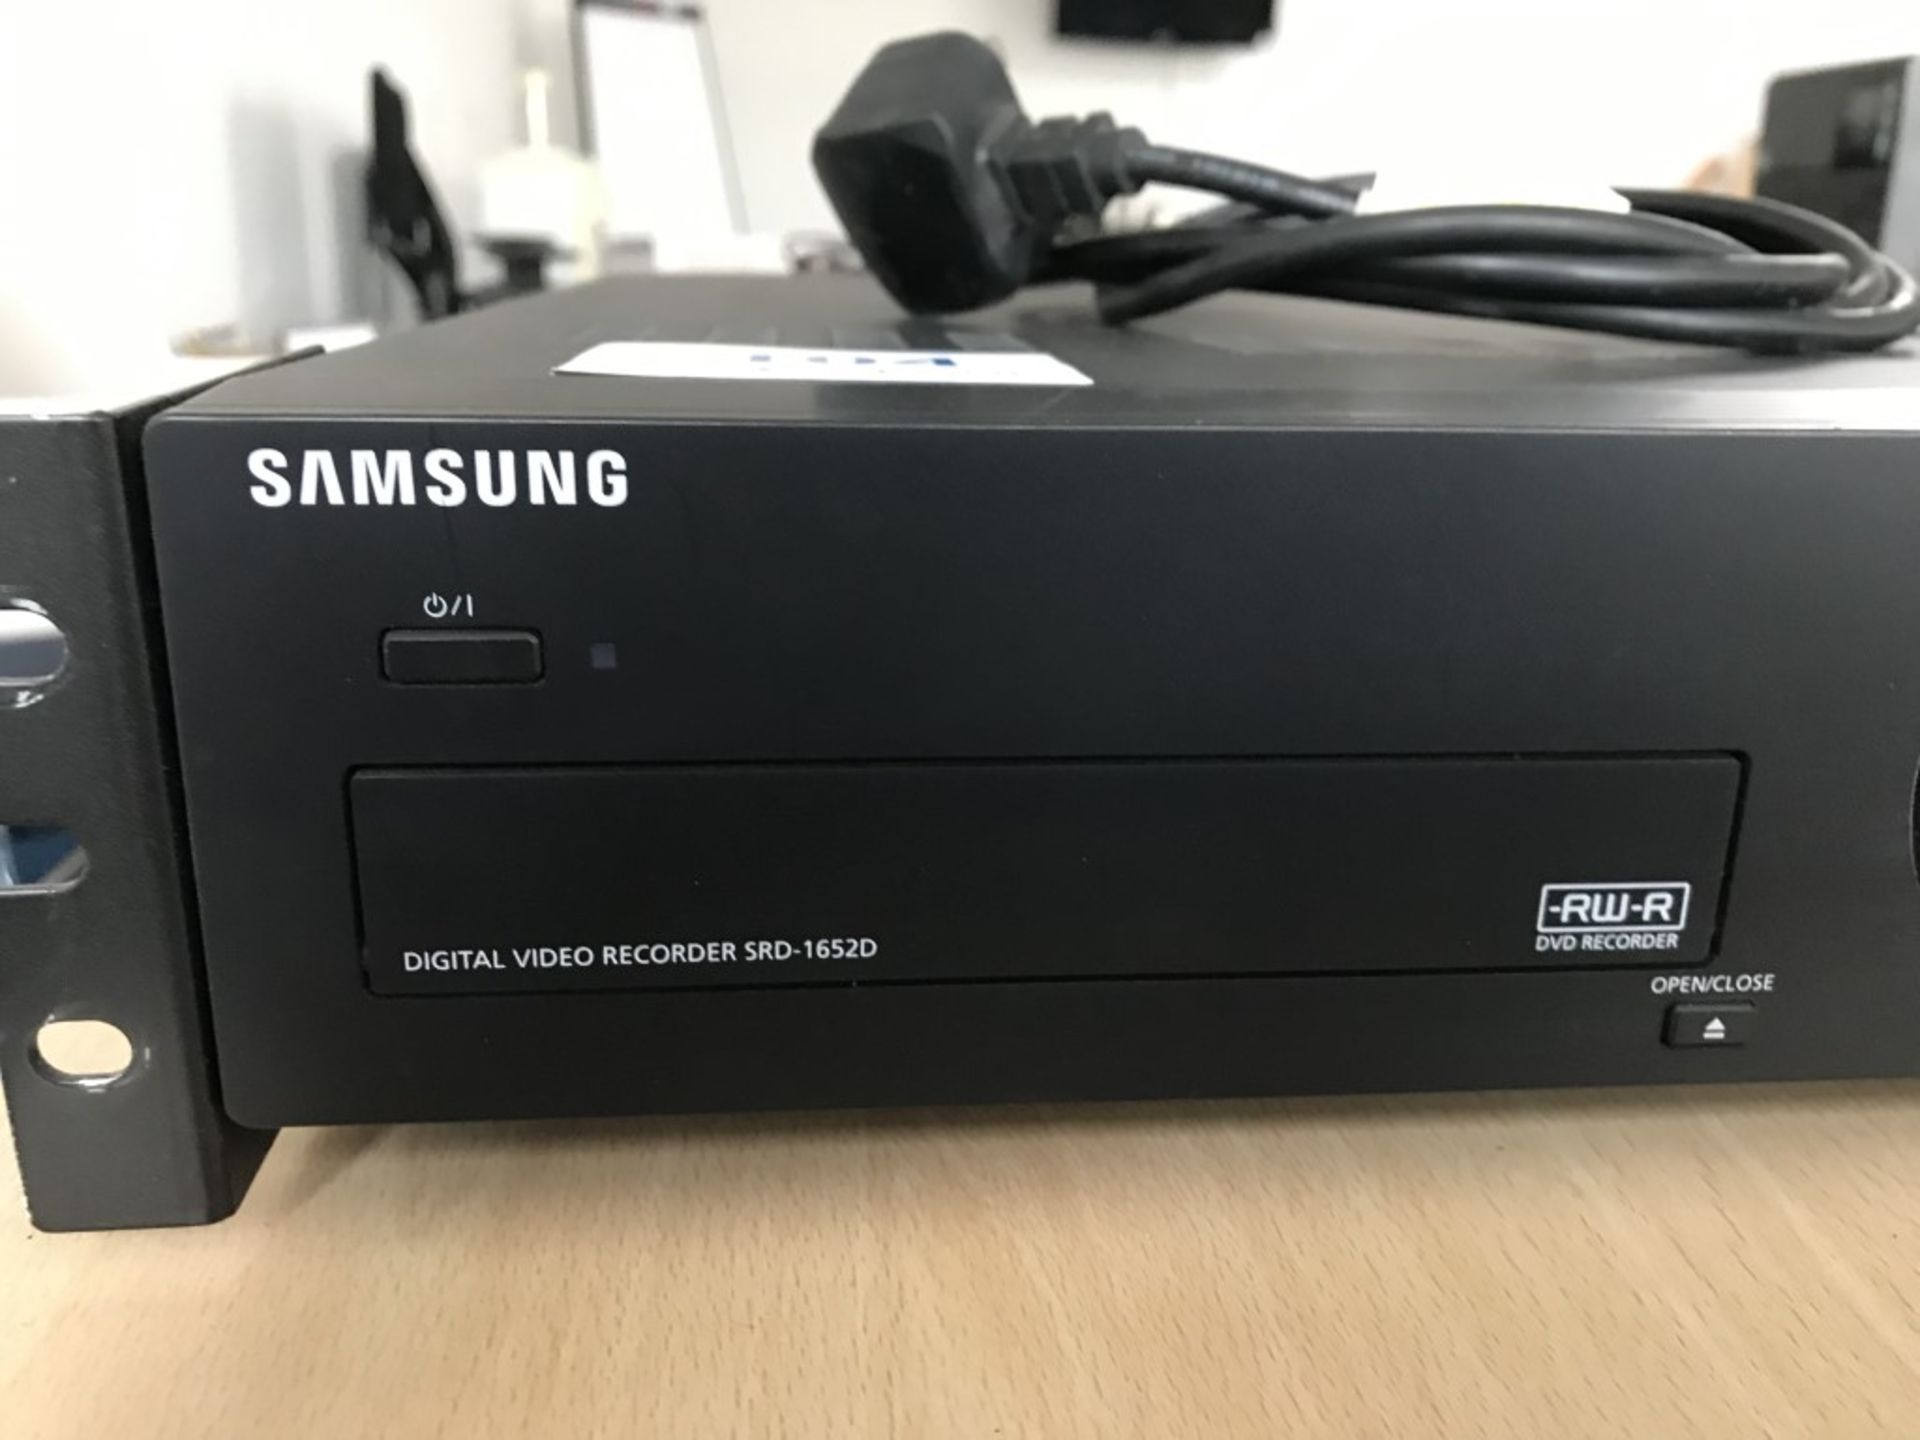 Samsung Digital Video Recorder SRD-1652D - Image 2 of 4